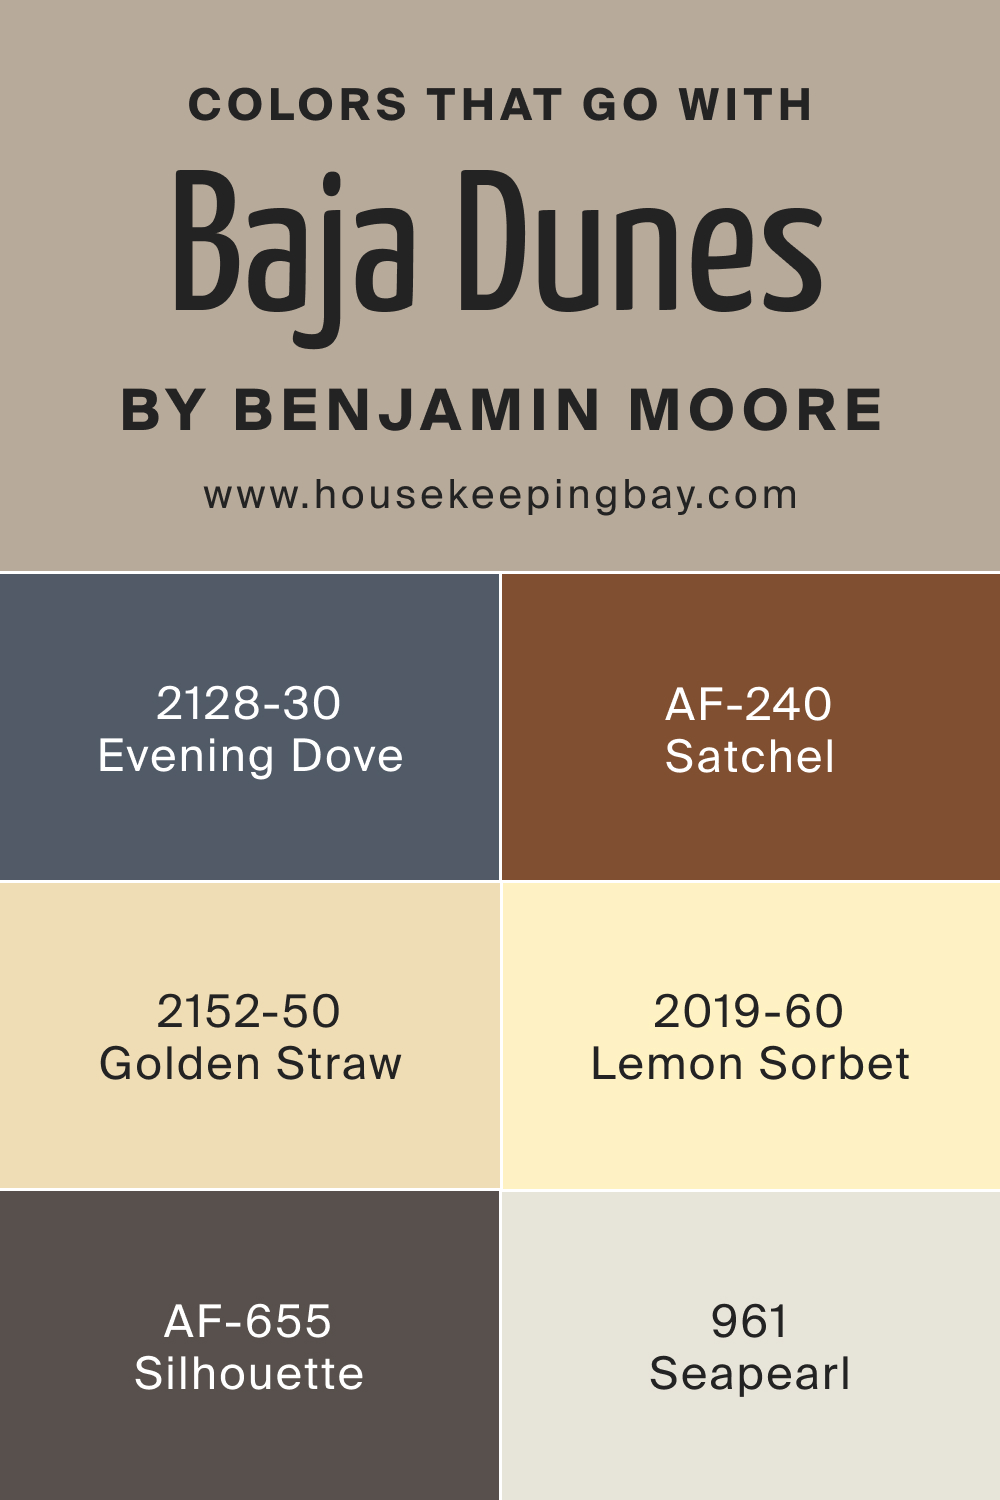 Colors that go with BM Baja Dunes 997 by Benjamin Moore